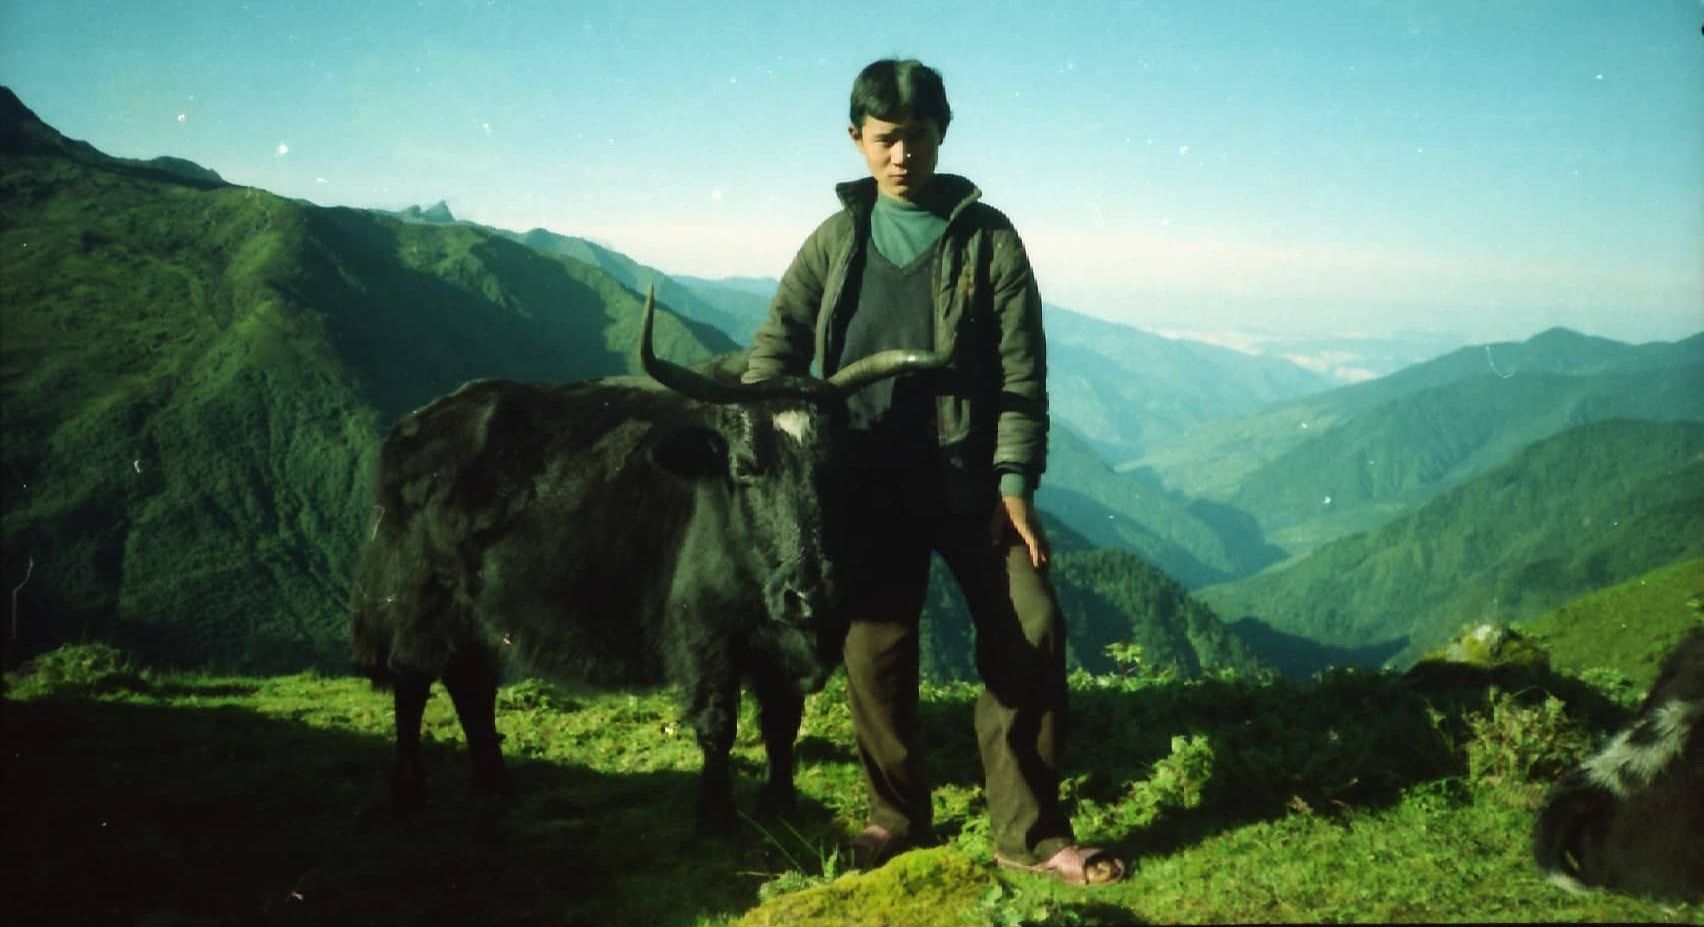 Sherpa boy and yak at Charma